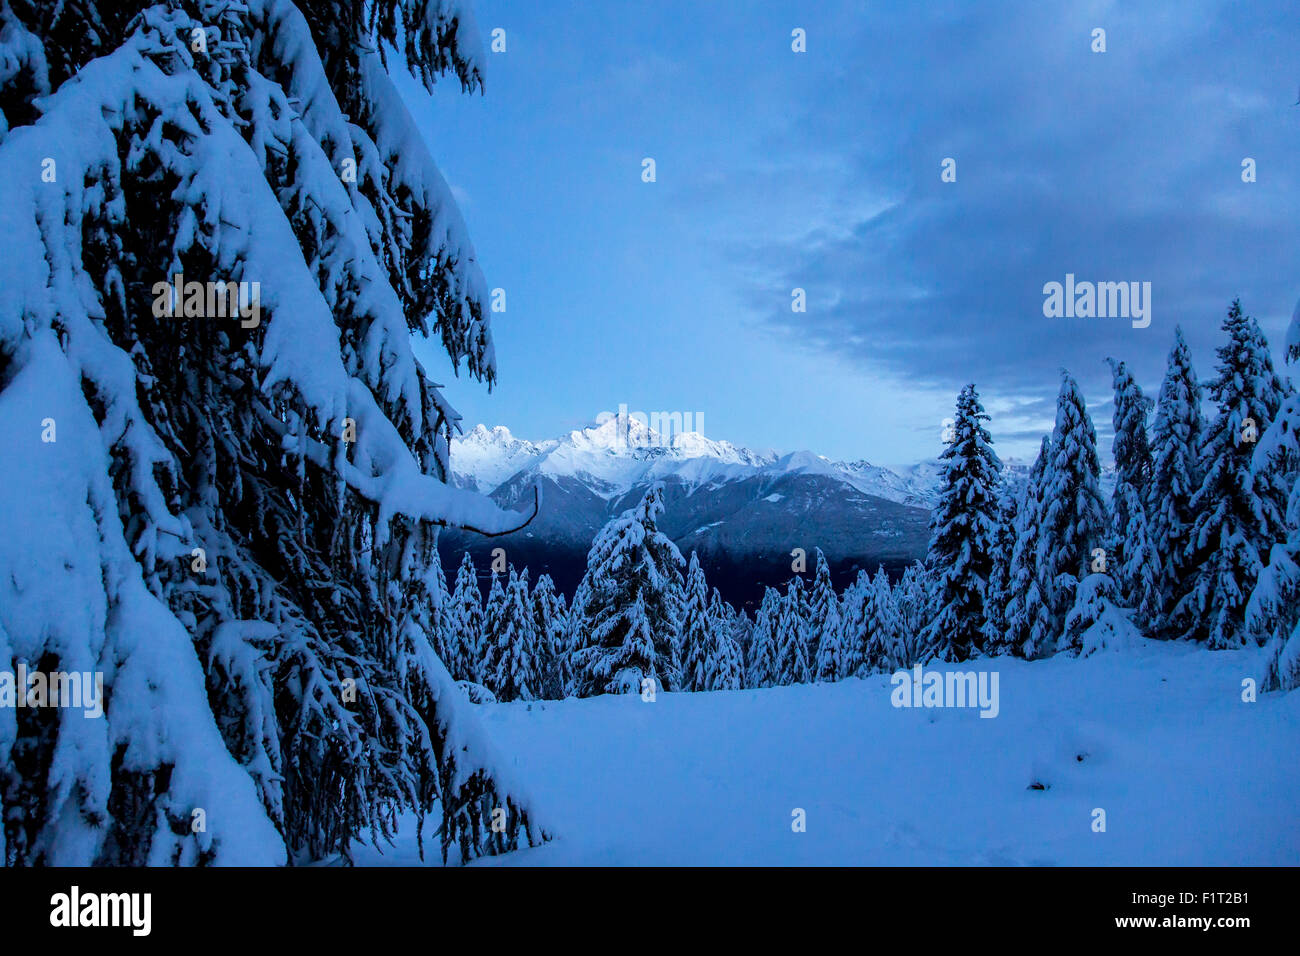 The autumn snowy landscape, Casera Lake, Livrio Valley, Orobie Alps, Valtellina, Lombardy, Italy, Europe Stock Photo